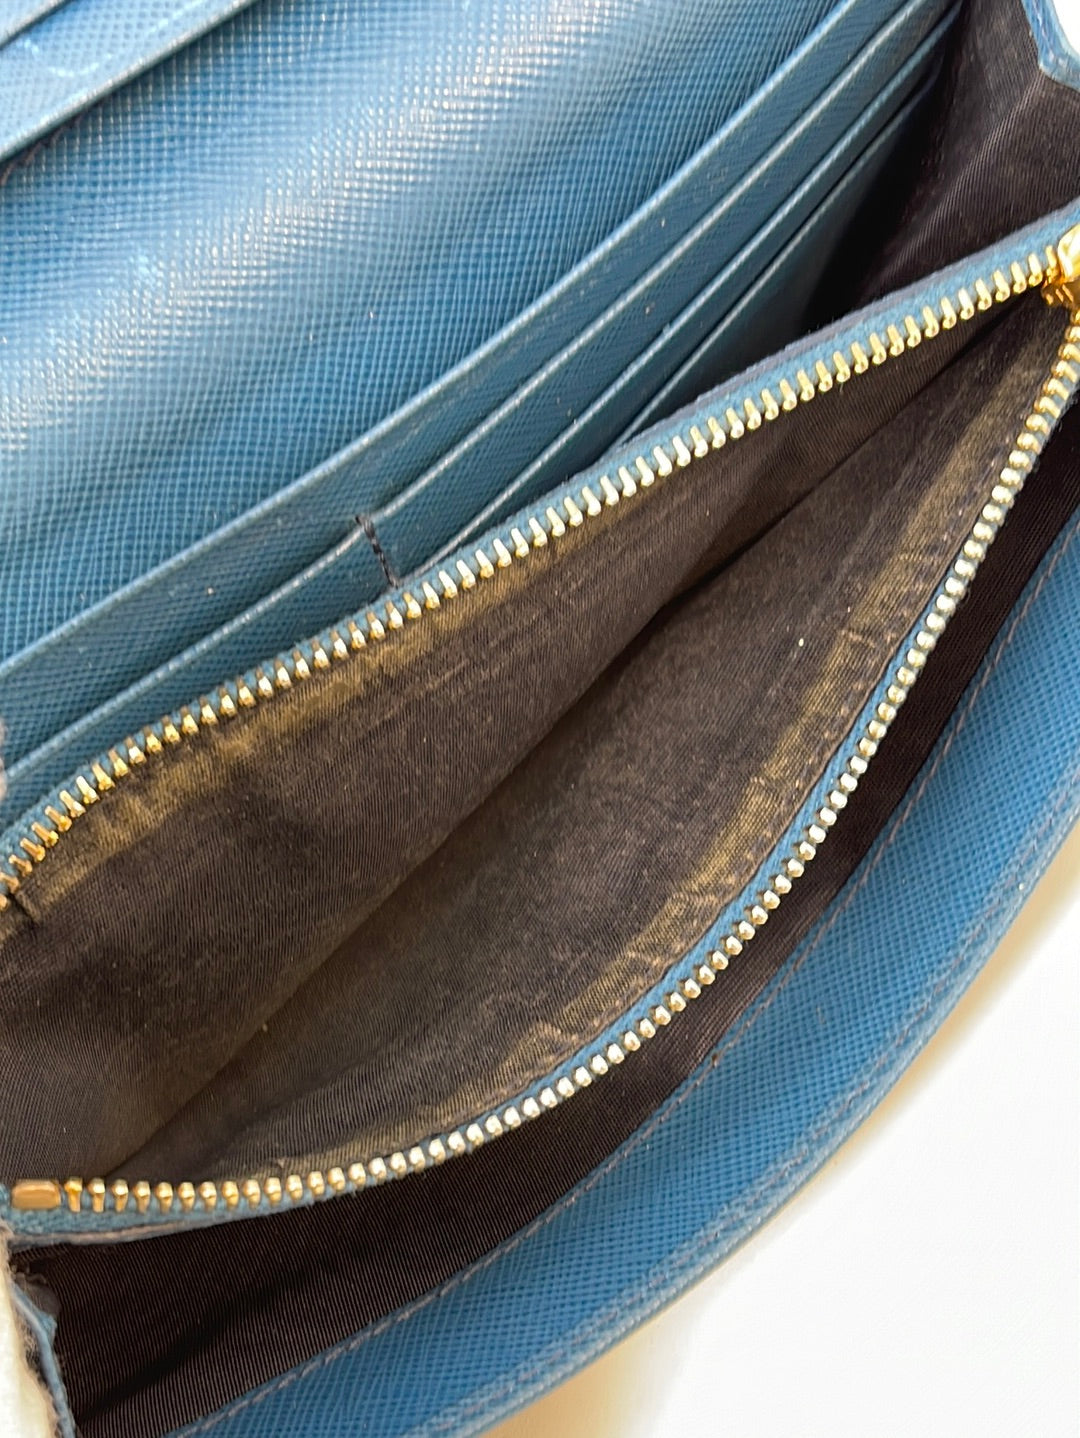 Prada, Bags, Prada Saffiano Leather Black Wallet With Bow Serial Code 224